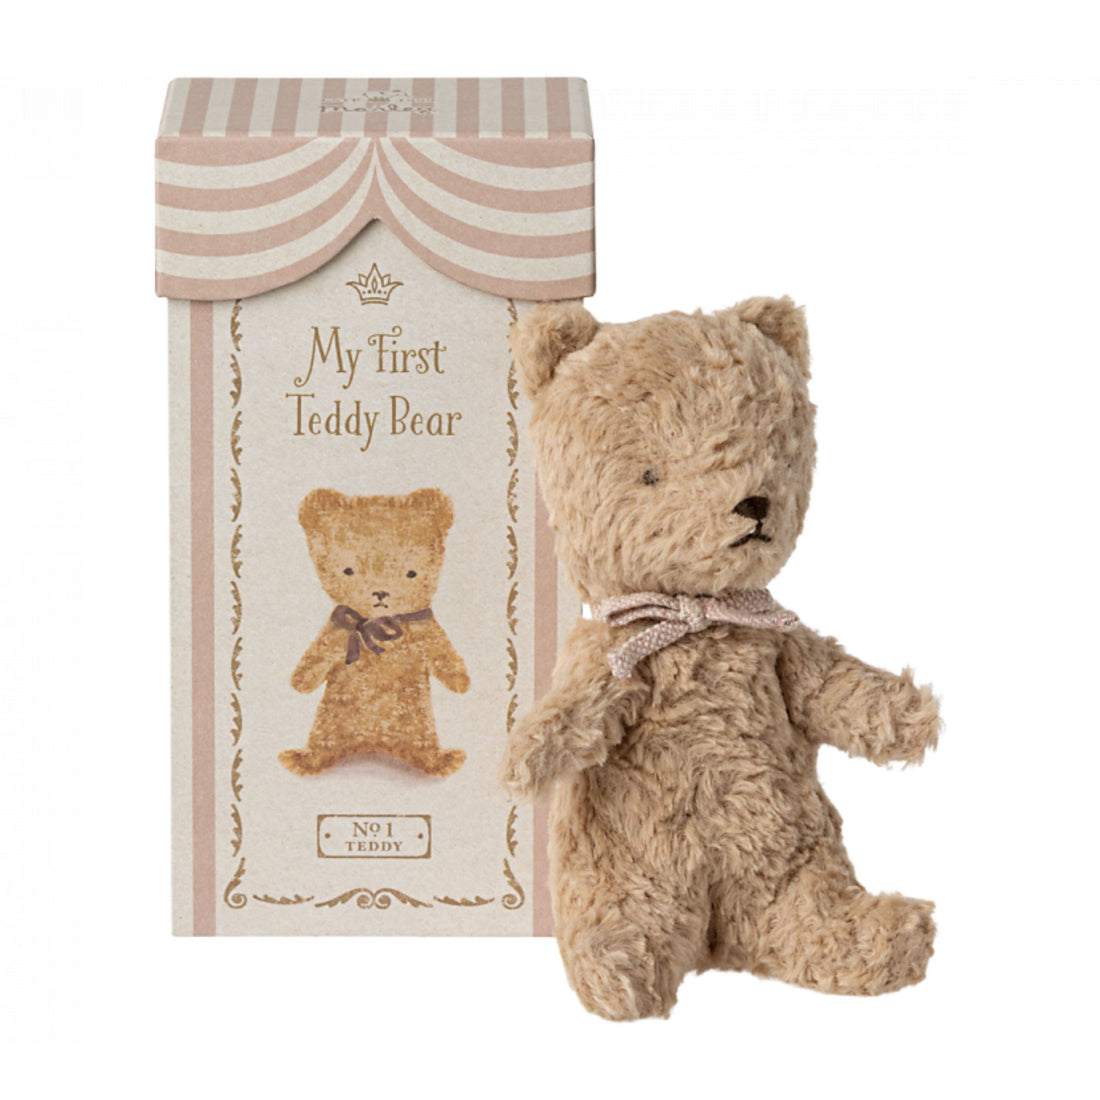 Maileg Teddy bear in a pink box